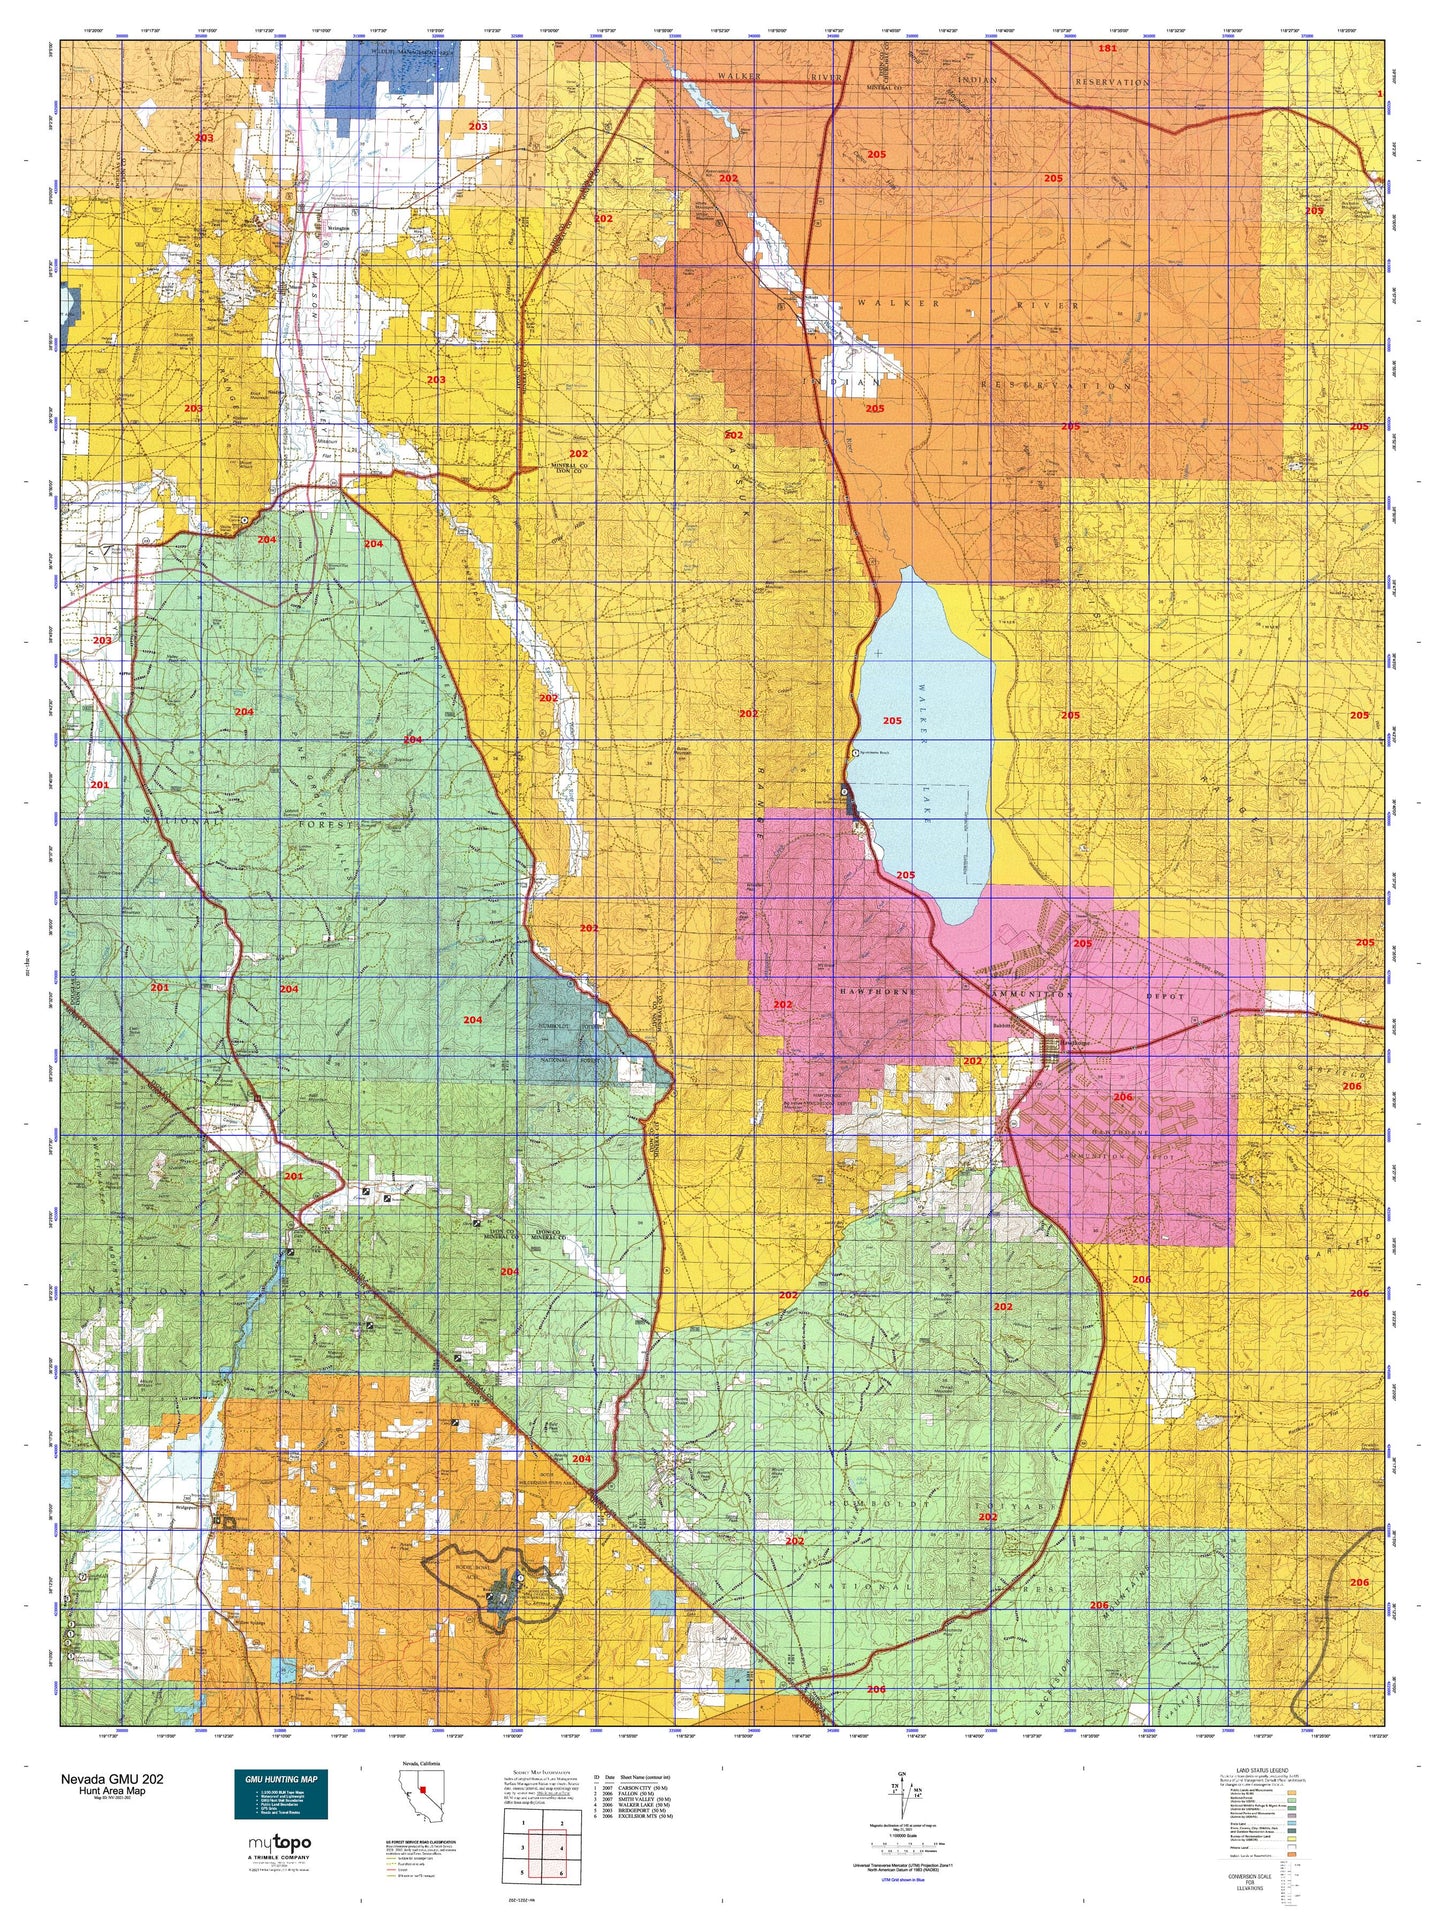 Nevada GMU 202 Map Image